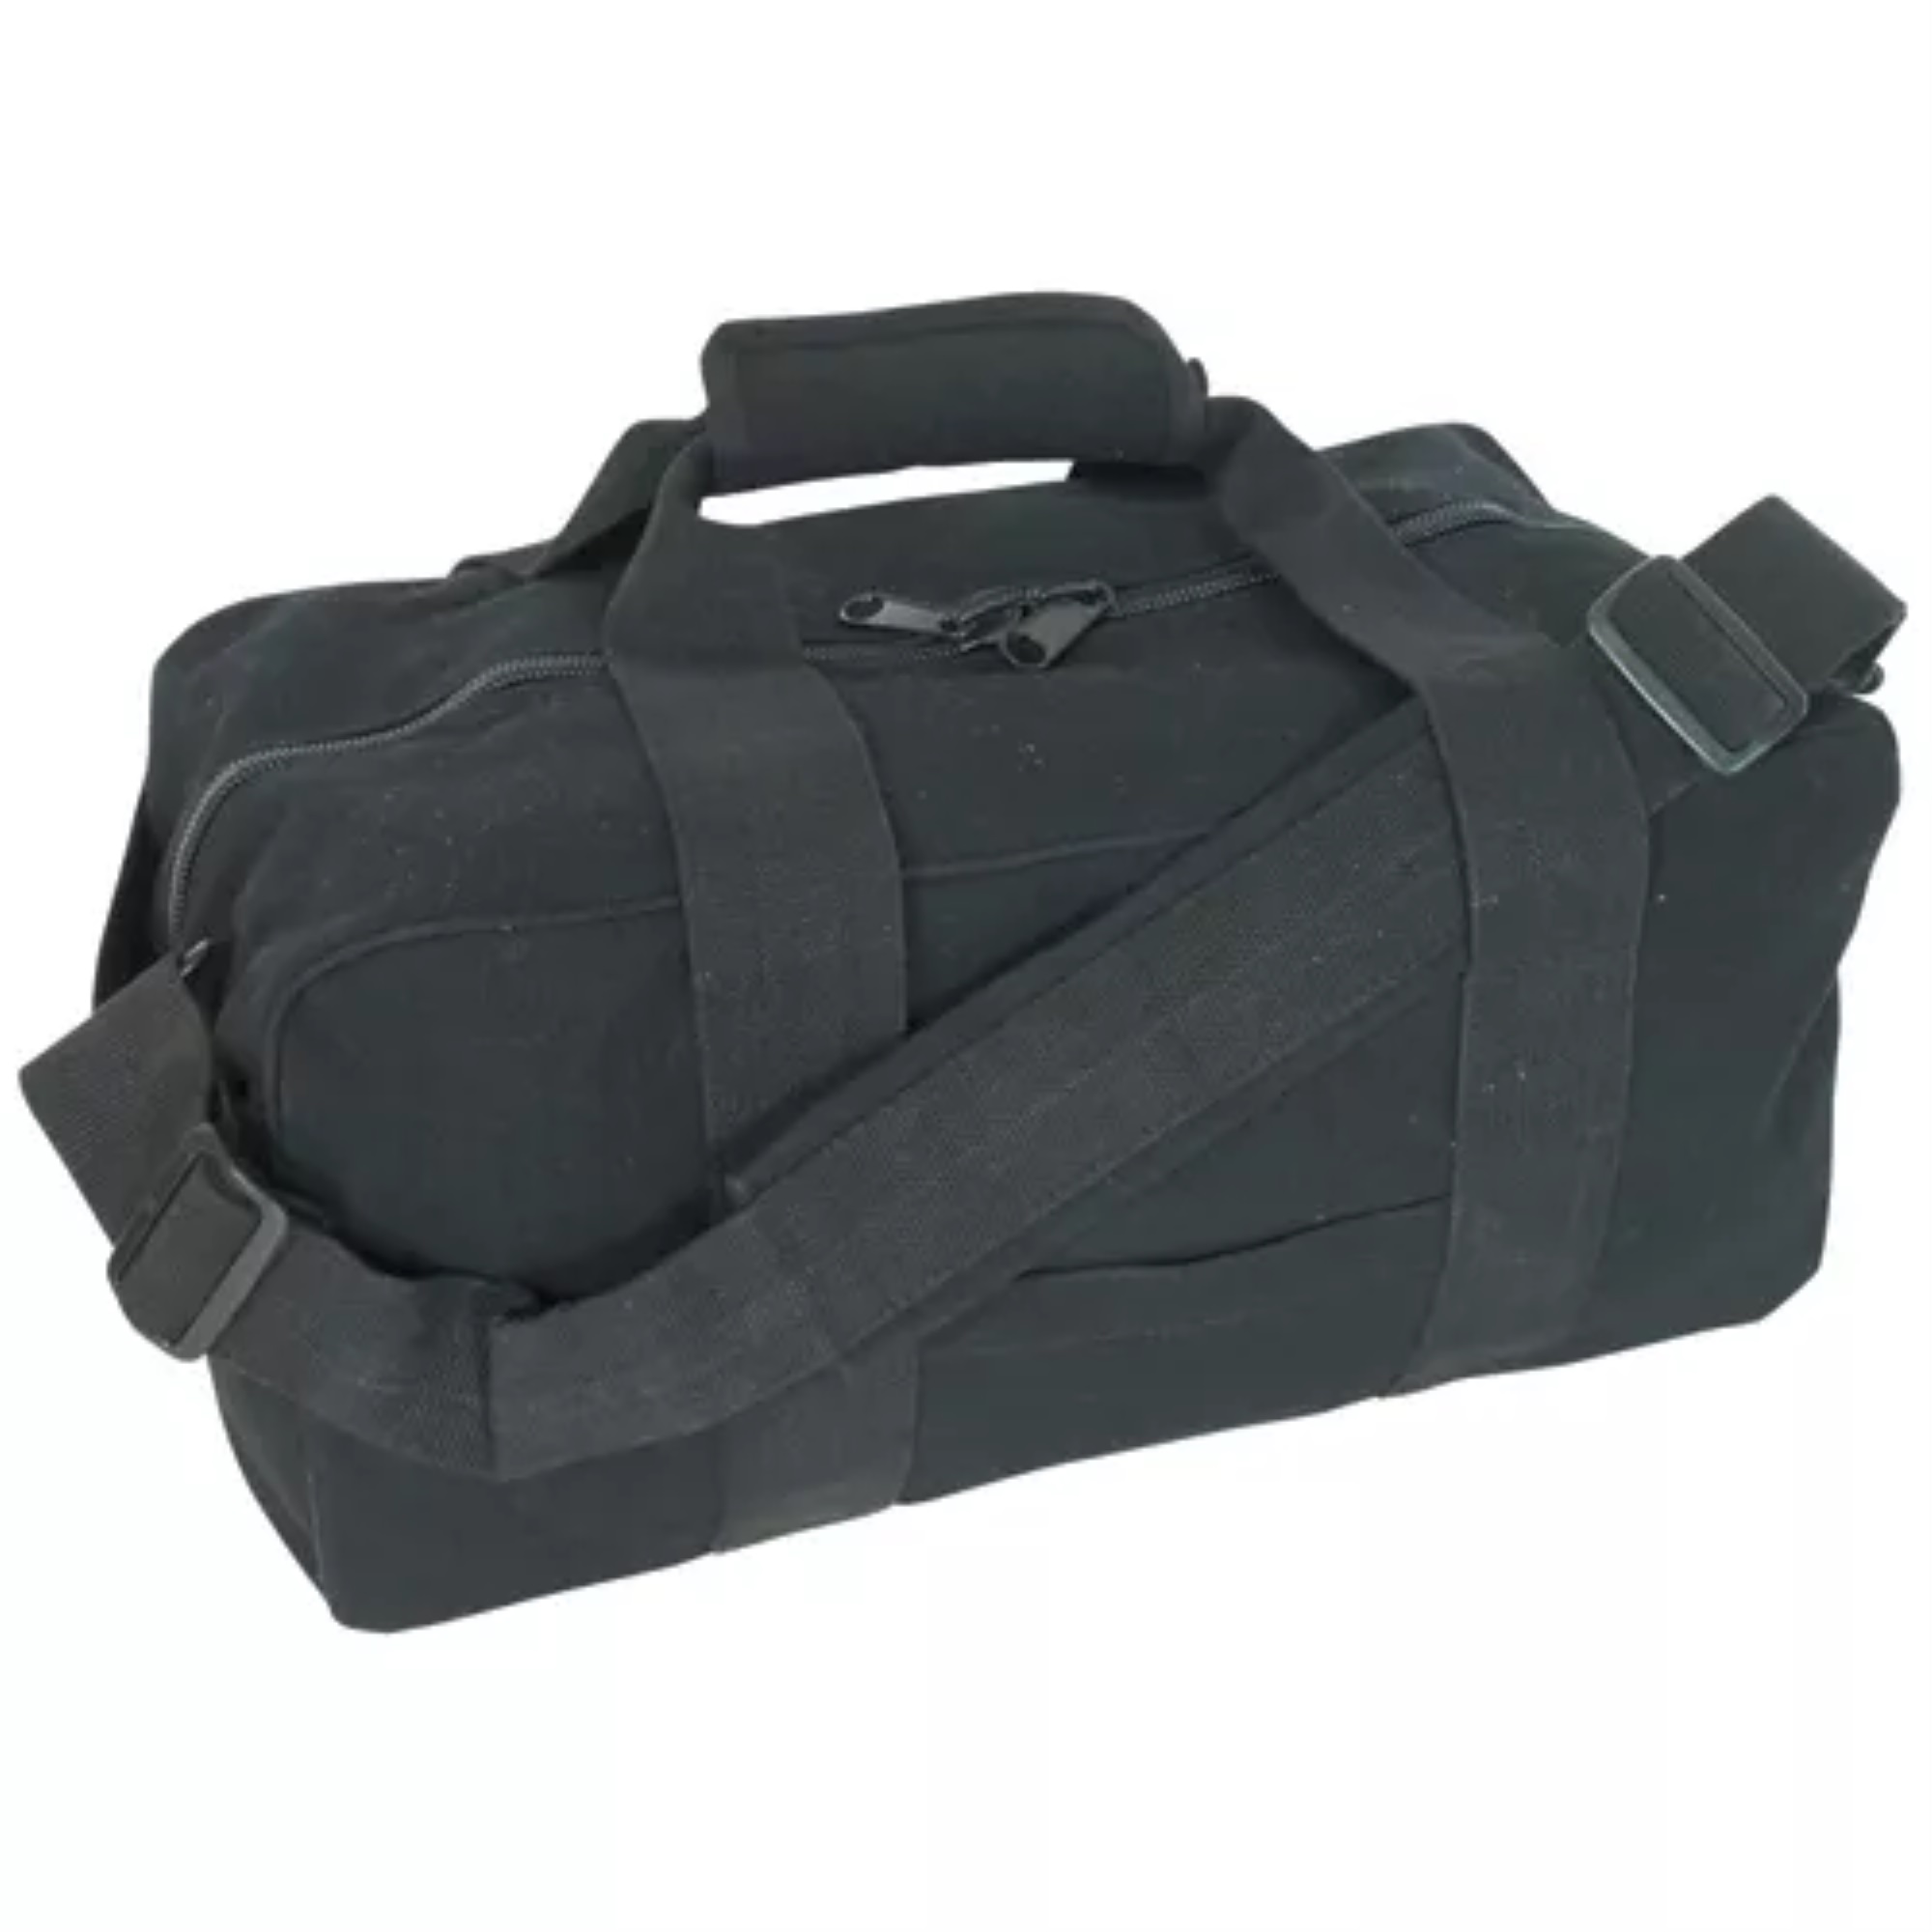 Fox Outdoor 41-41 BLACK     Gear Bag (18" x 36") - image 1 of 2